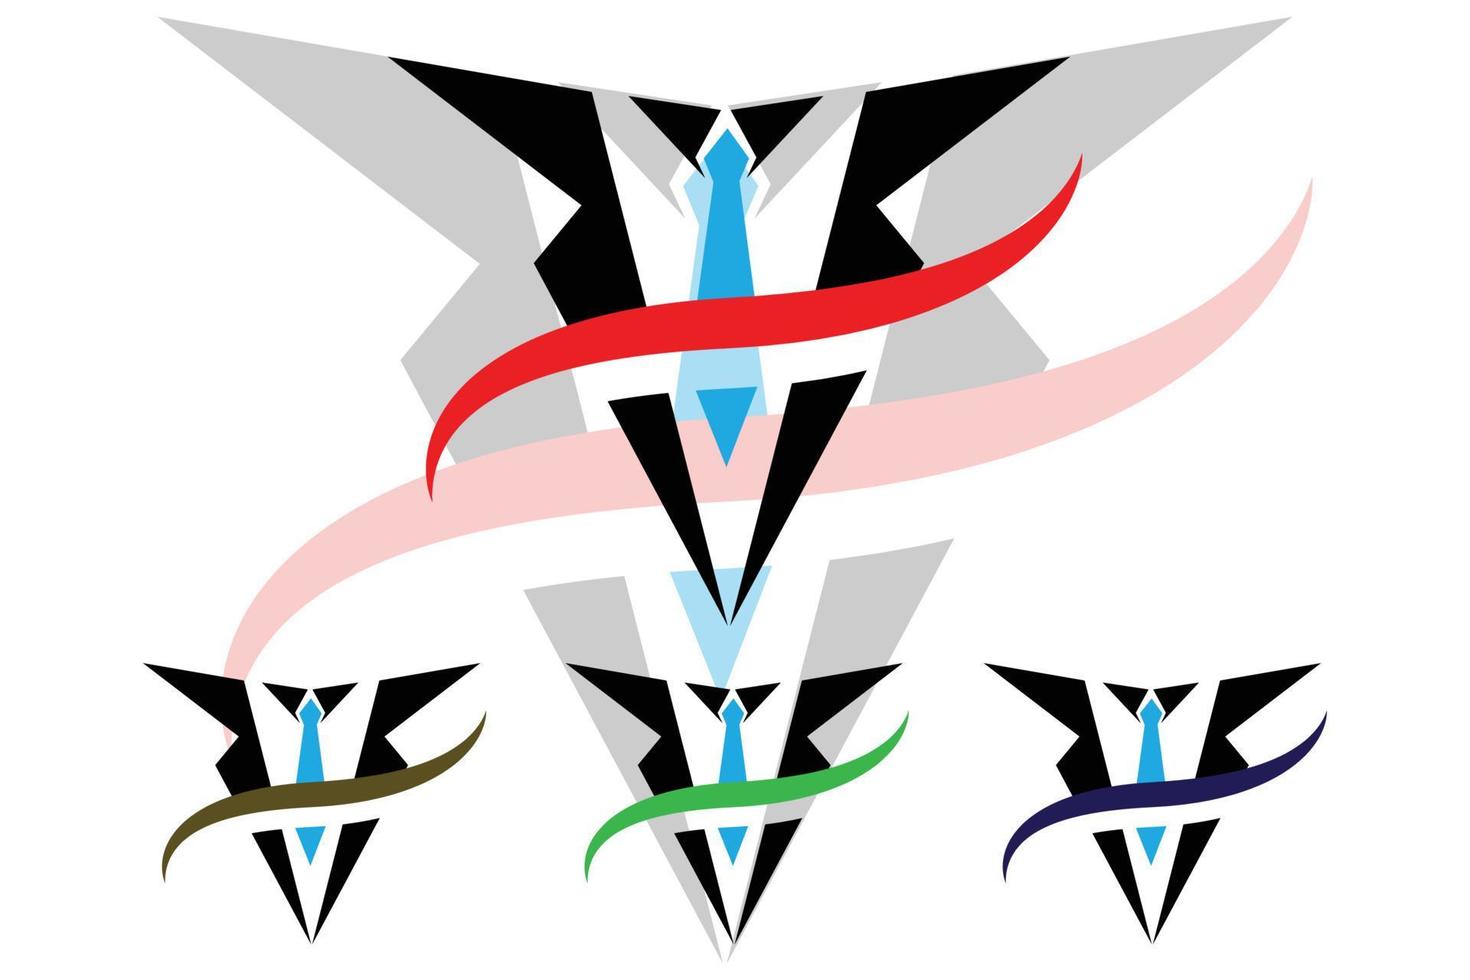 Trident Logo Template vector icon